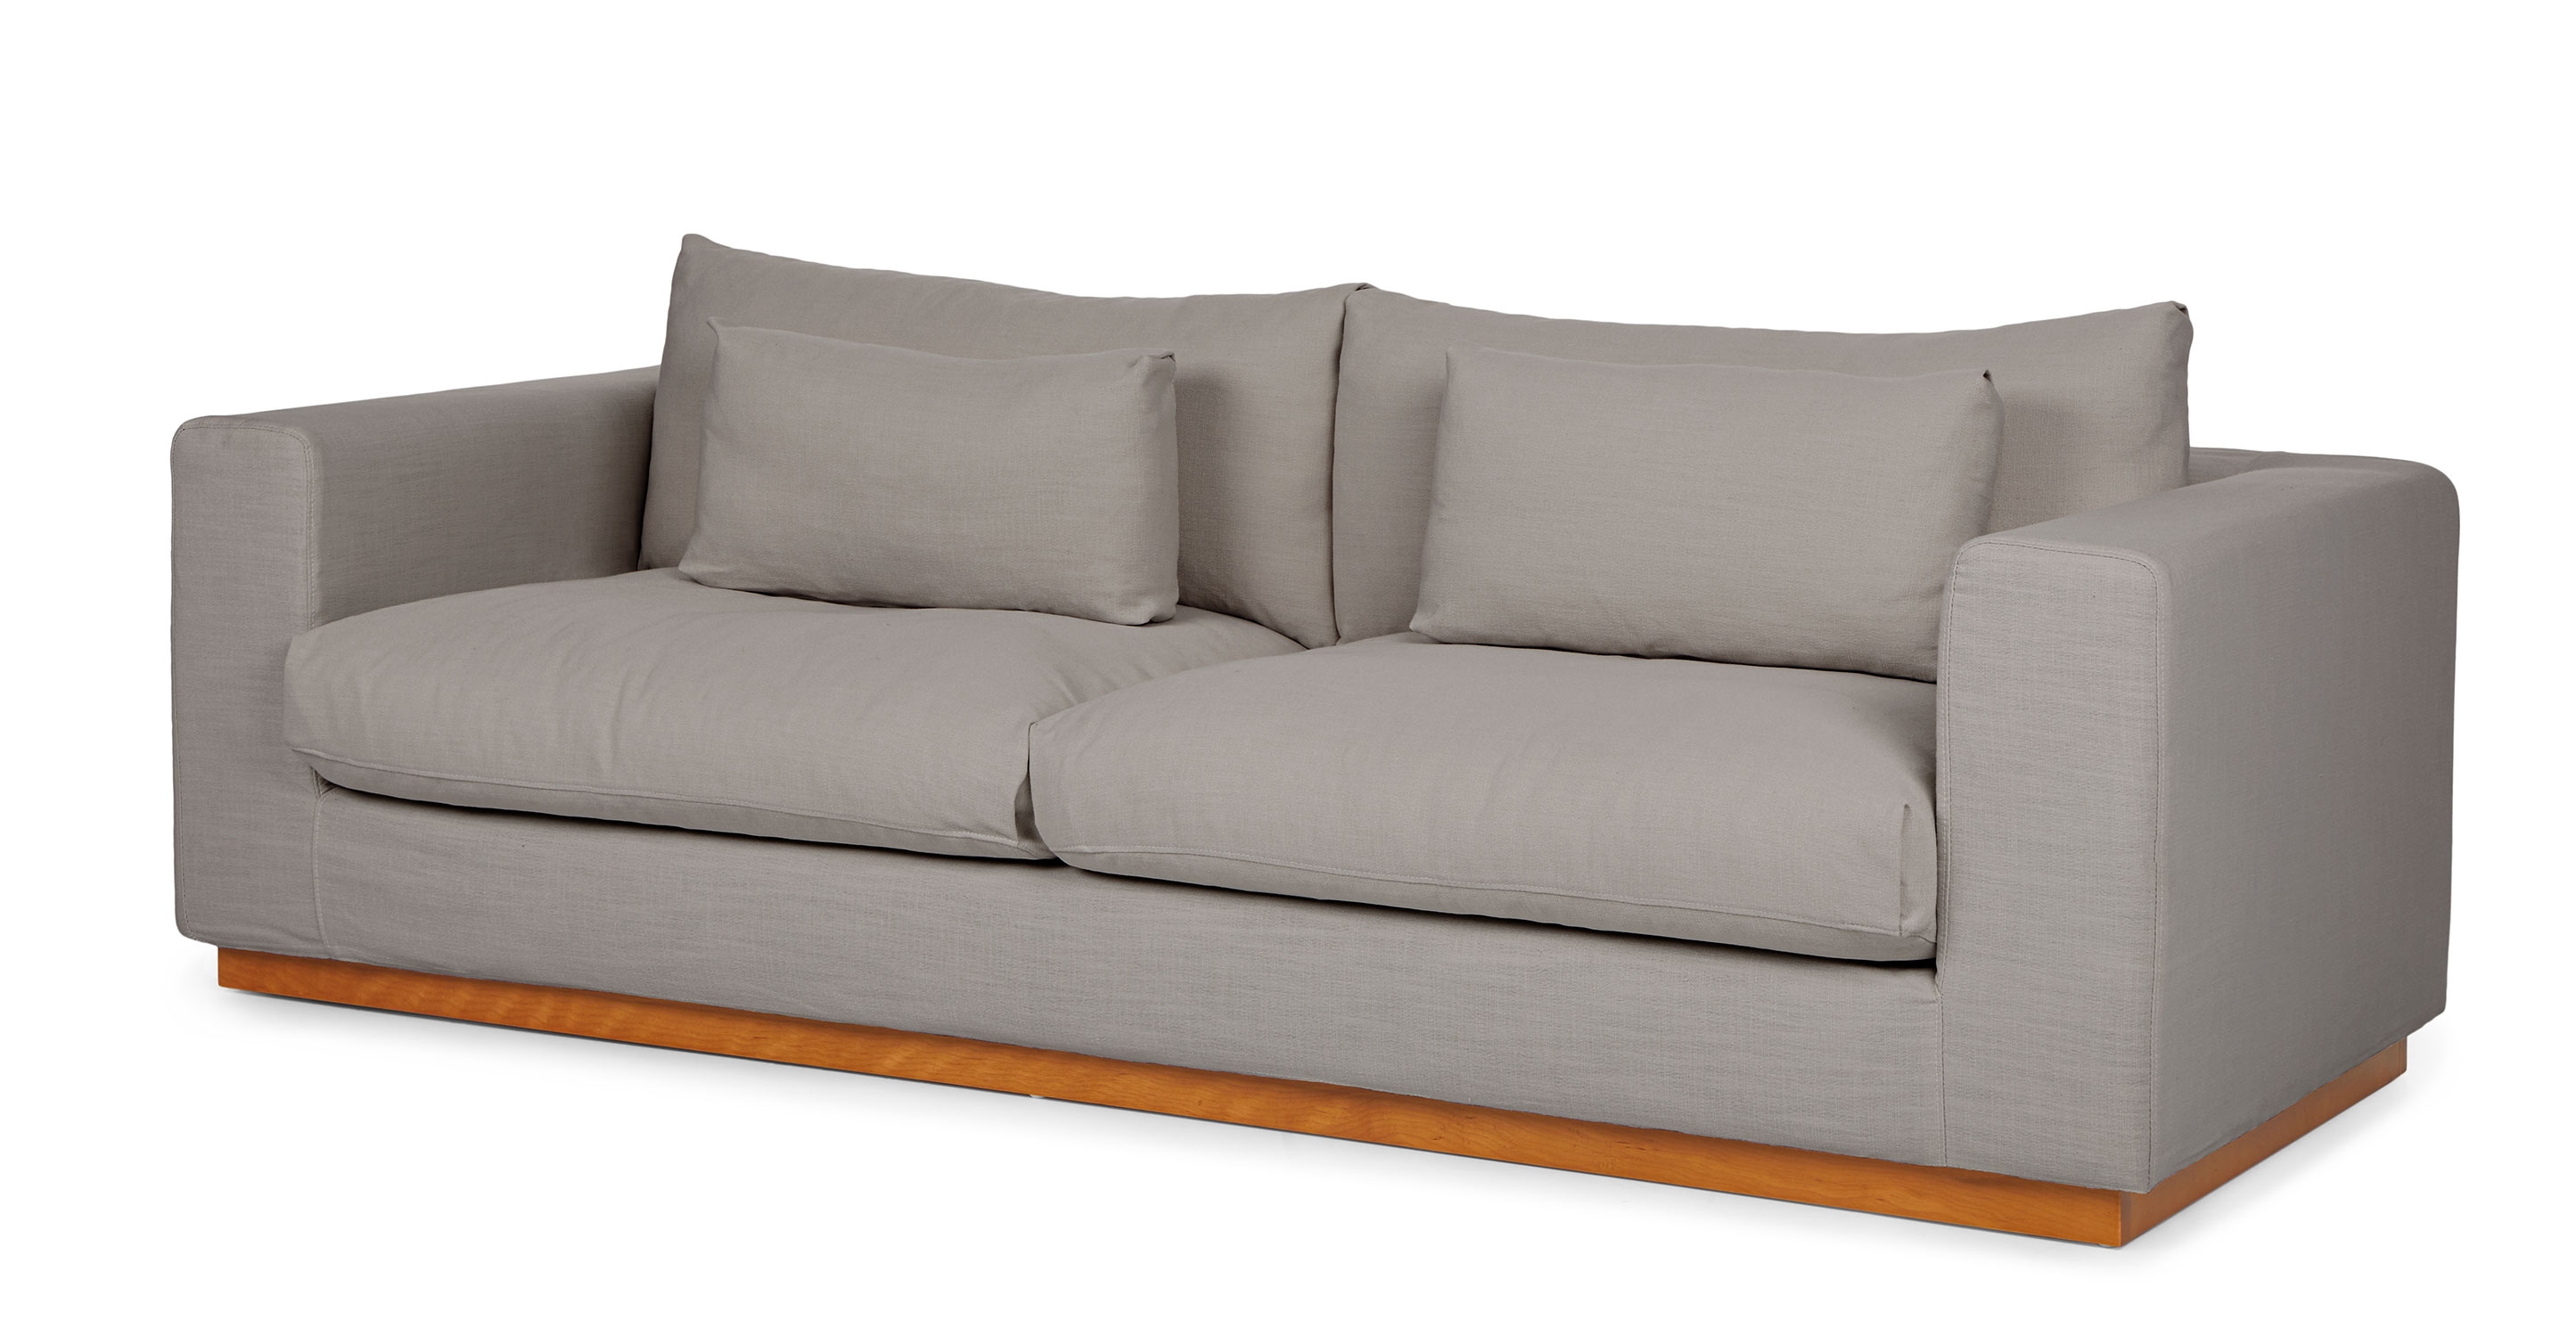 Malsa Sofa, Pale Gray - Image 1